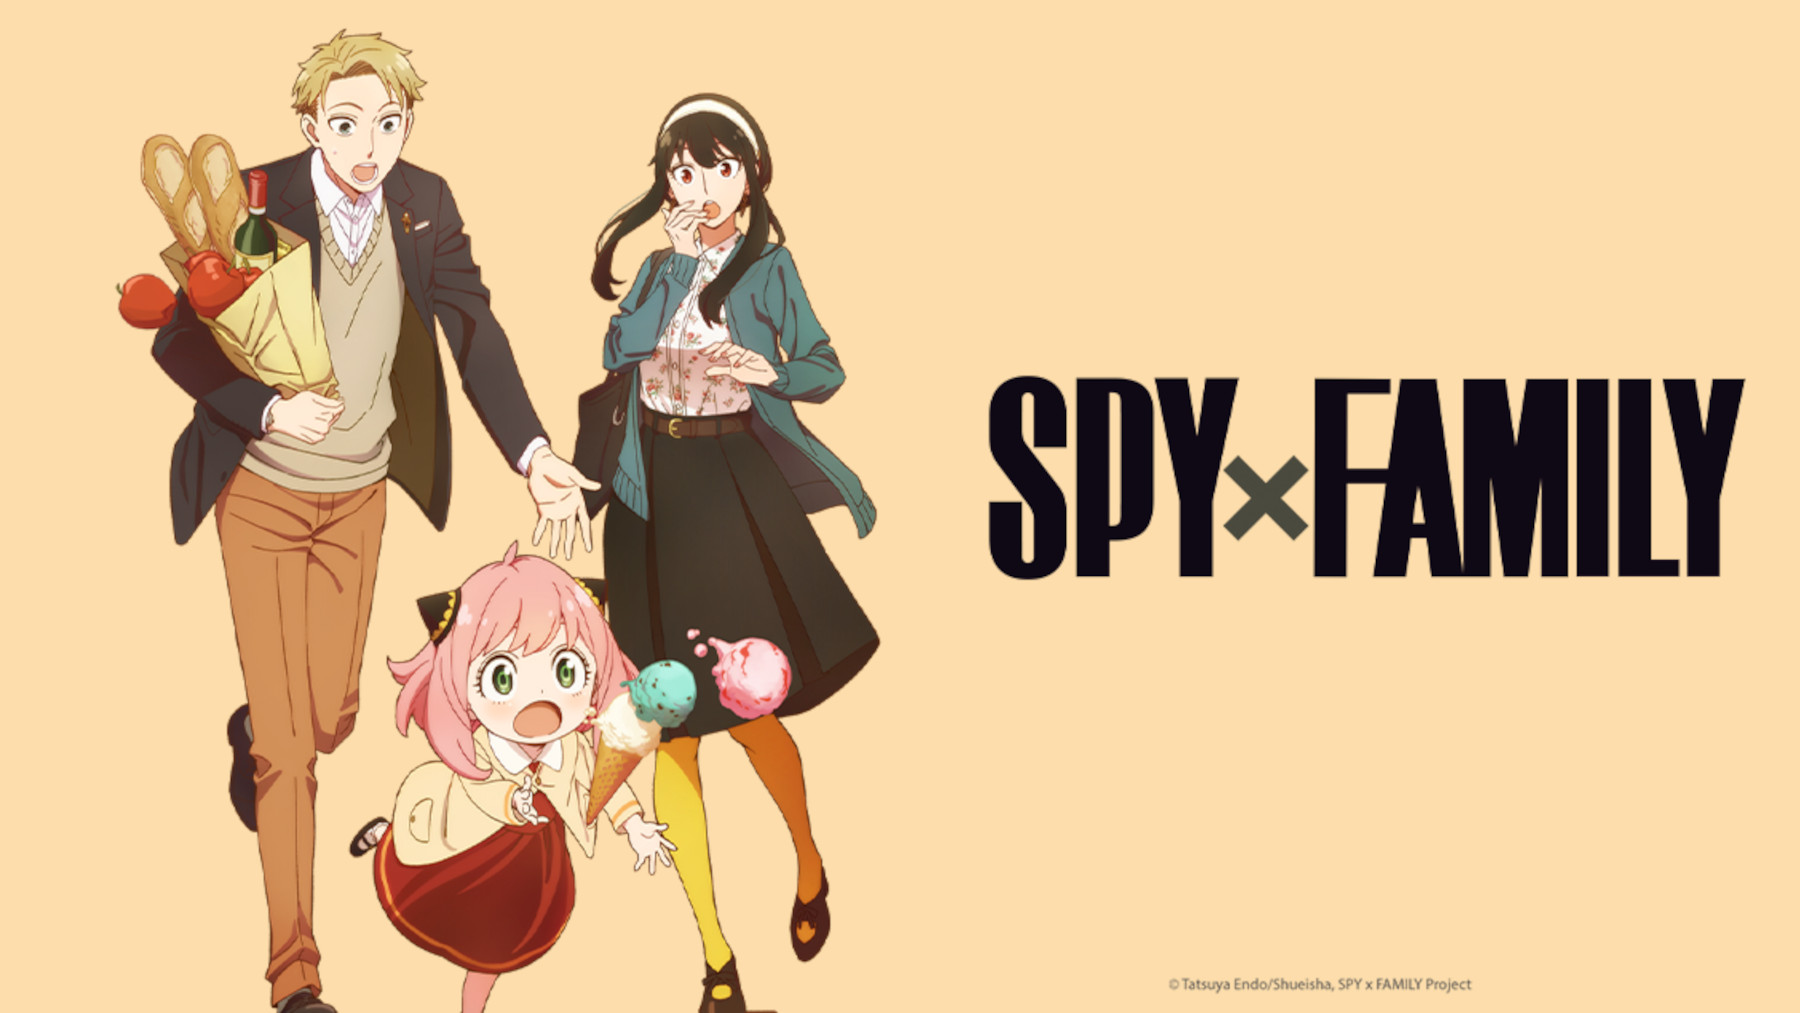 Spy x Family Season 2 Hits Crunchyroll in October